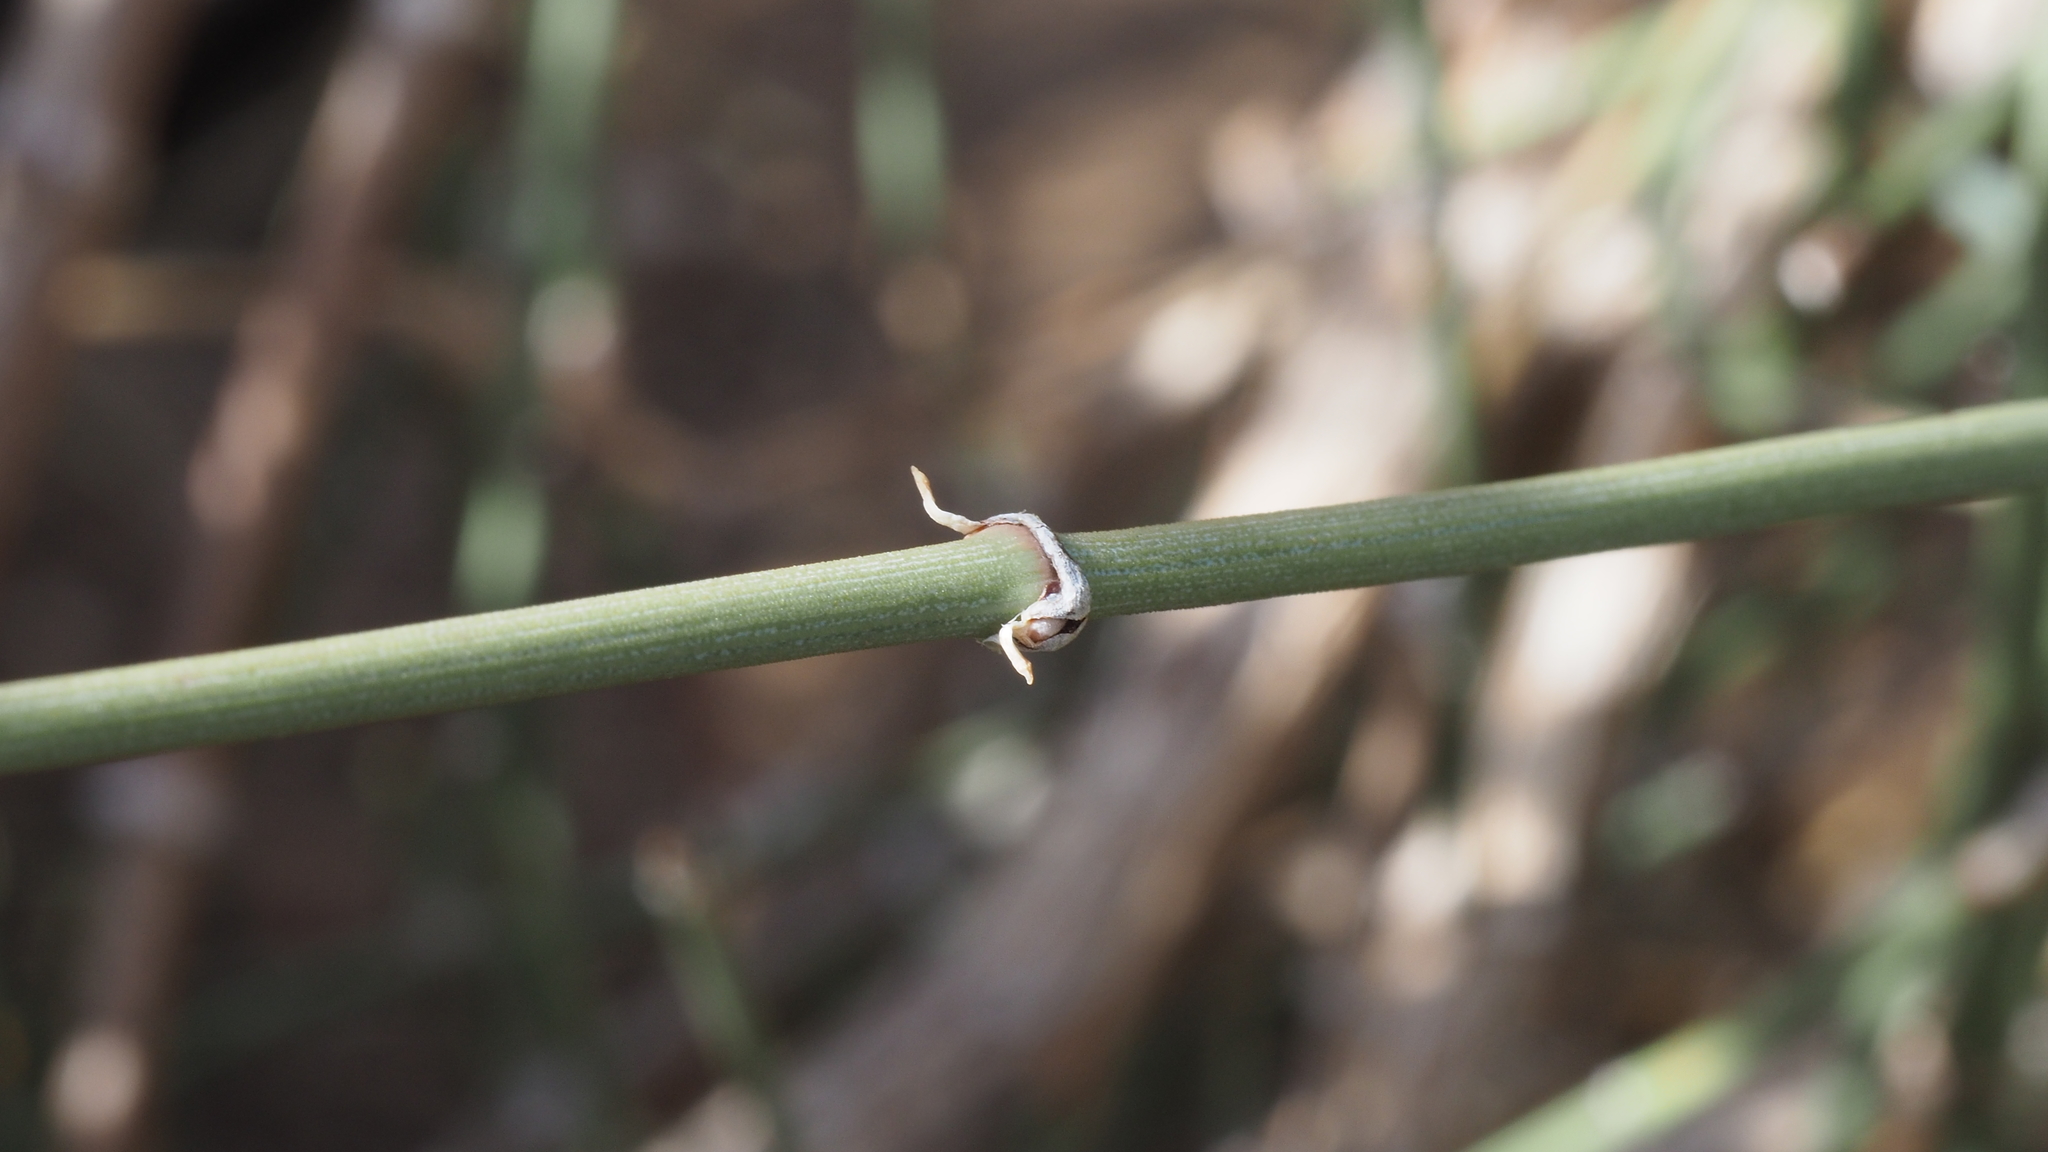 Un tallo delgado con dos hojas diminutas parecidas a escamas que emergen de cada lado de un nodo